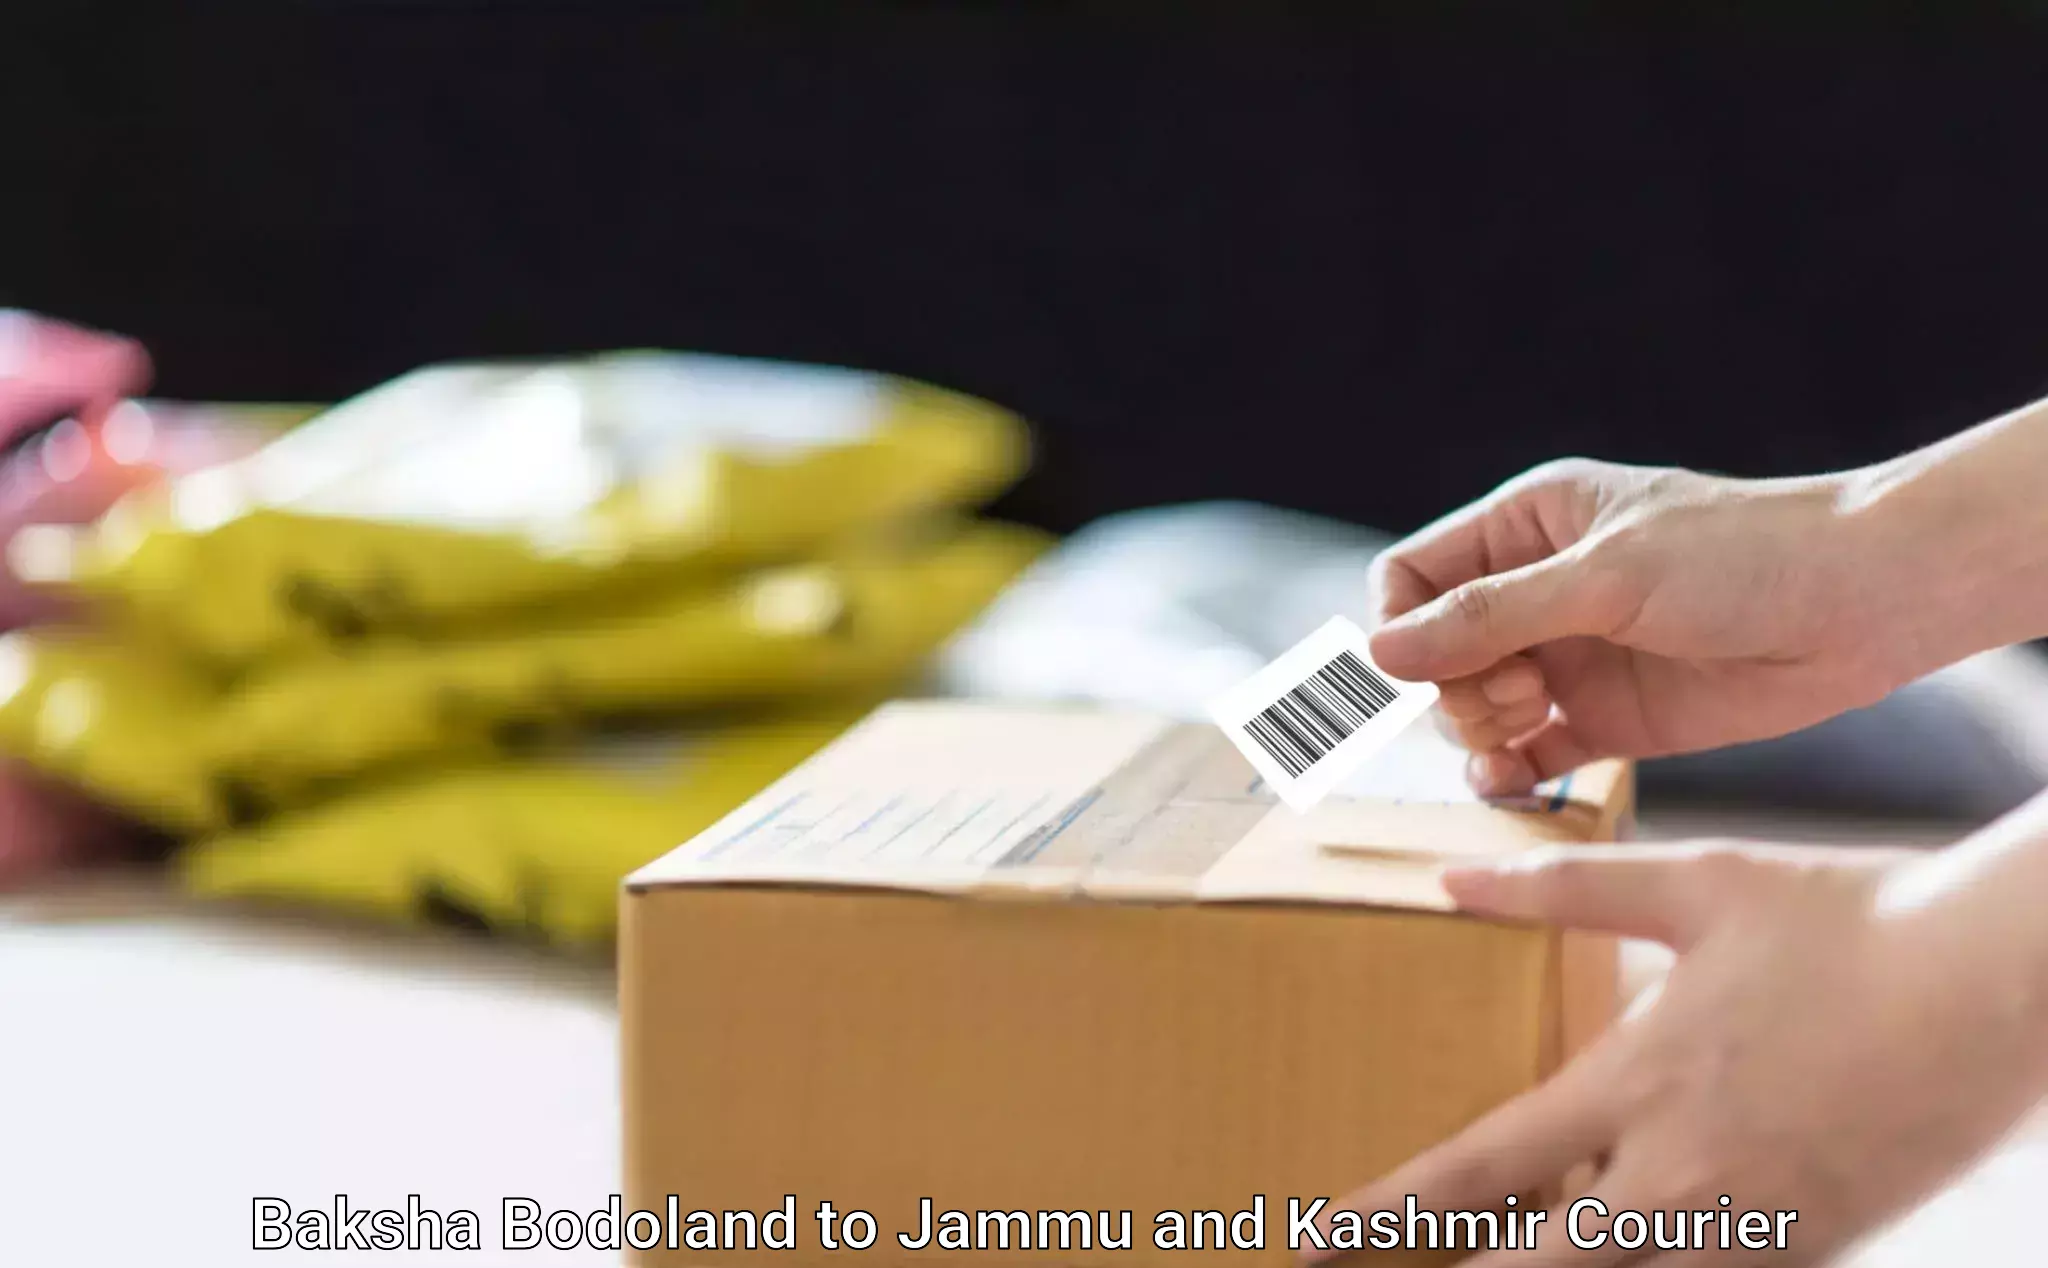 Weekend courier service Baksha Bodoland to Jammu and Kashmir